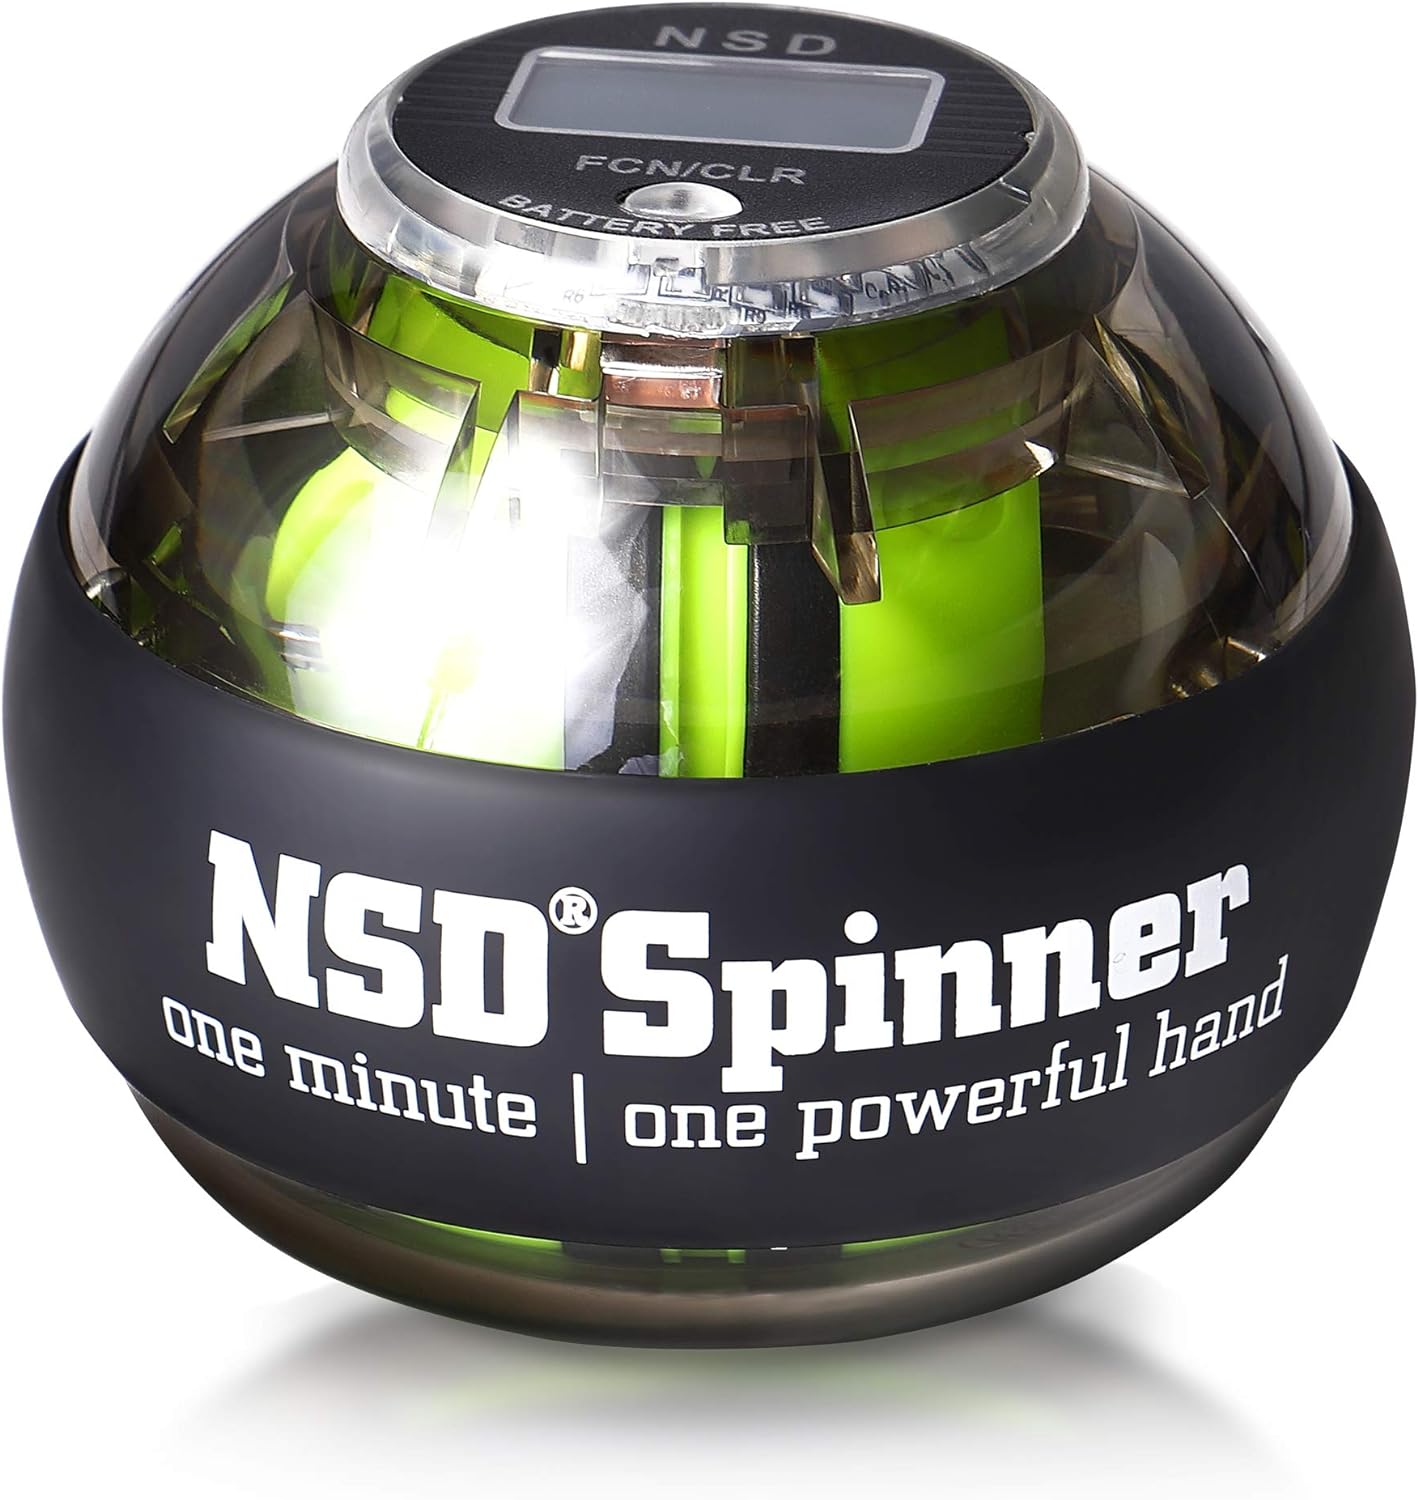 NSD Spinner オートスタート機能 日本正規代理店商品 握力 前腕 筋トレ ダンベル 腕の筋トレ 握力 トレーニング